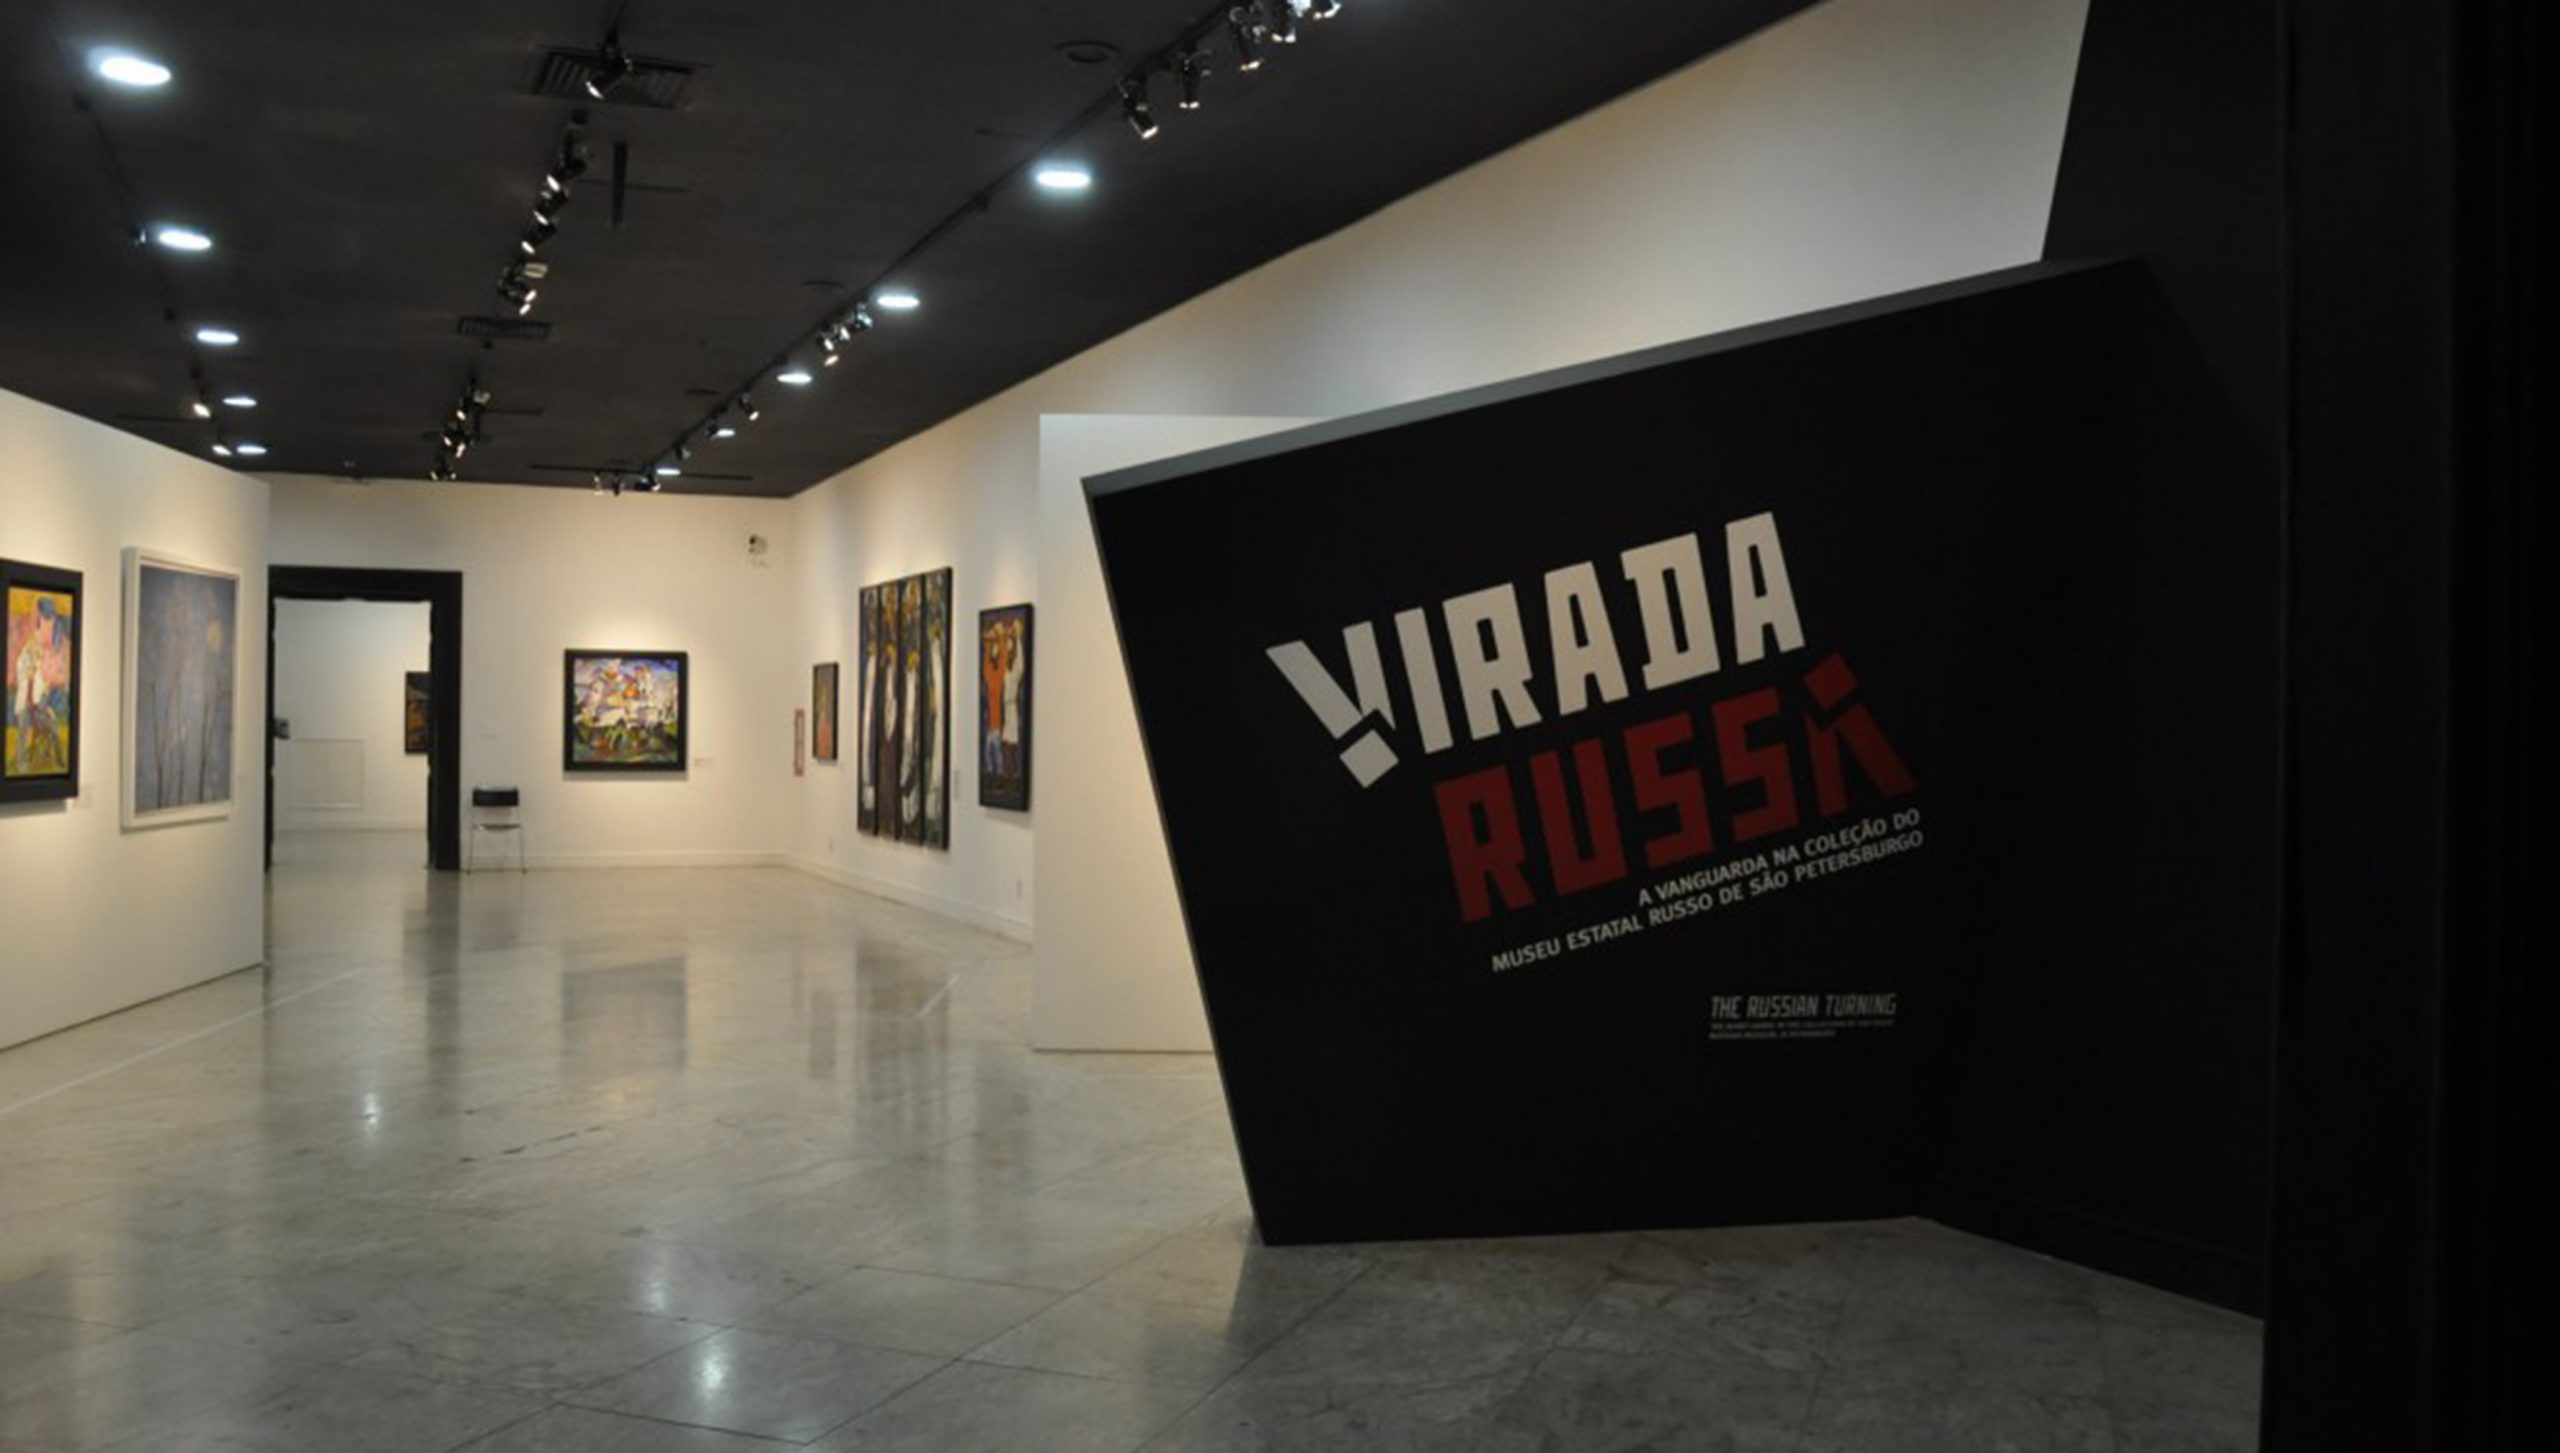 Virada-Russa-2